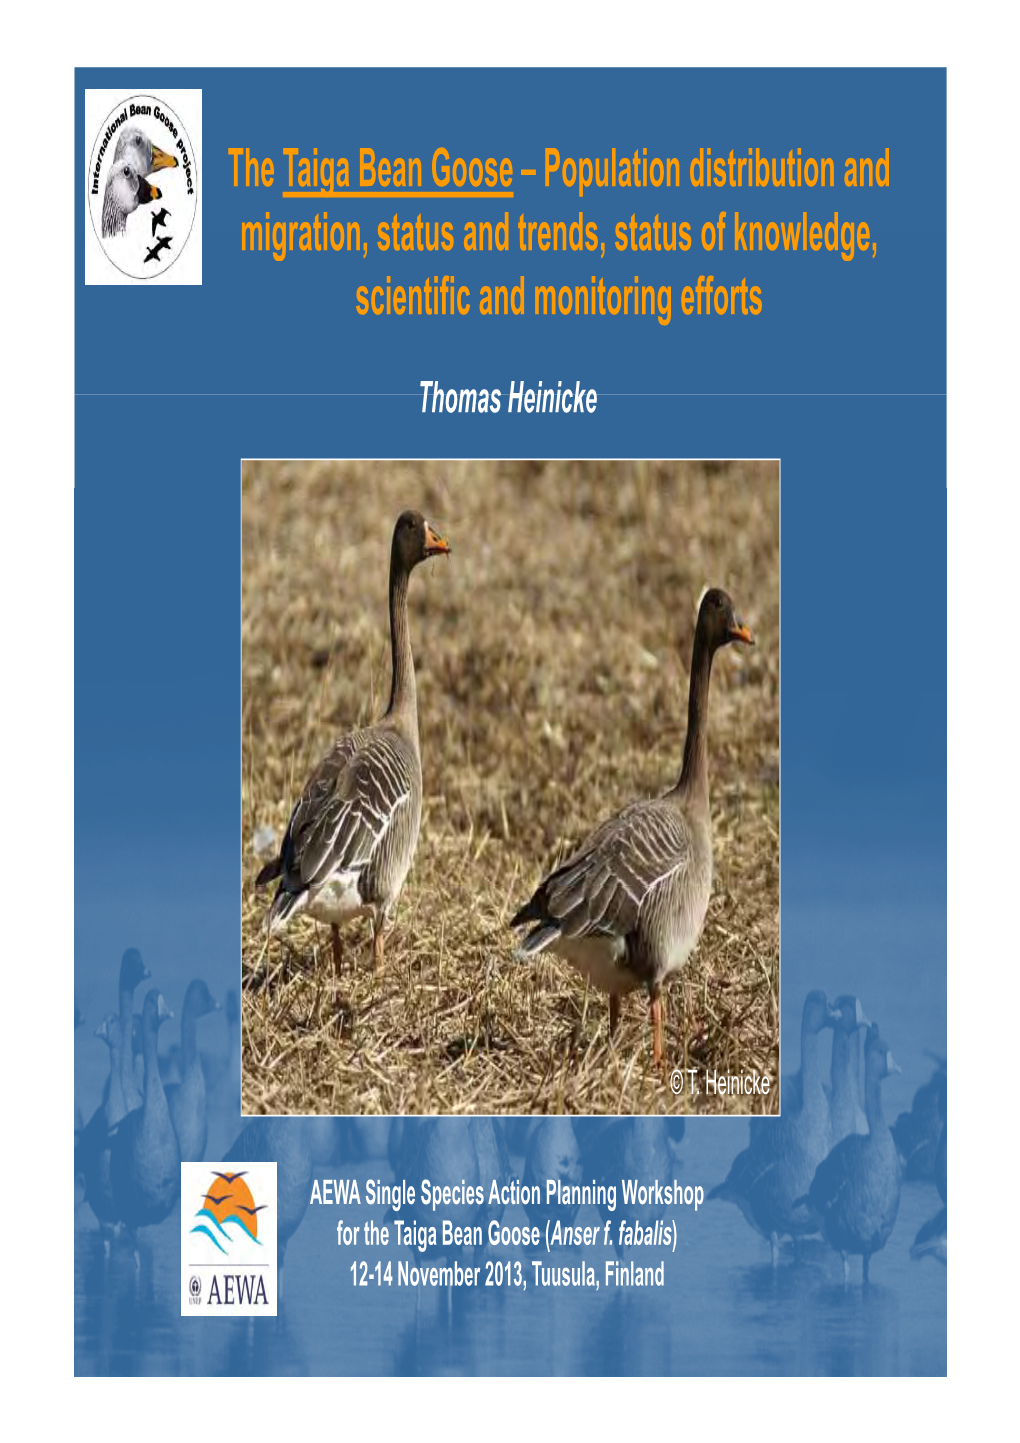 The Taiga Bean Goose – Population Distribution and Migration Status